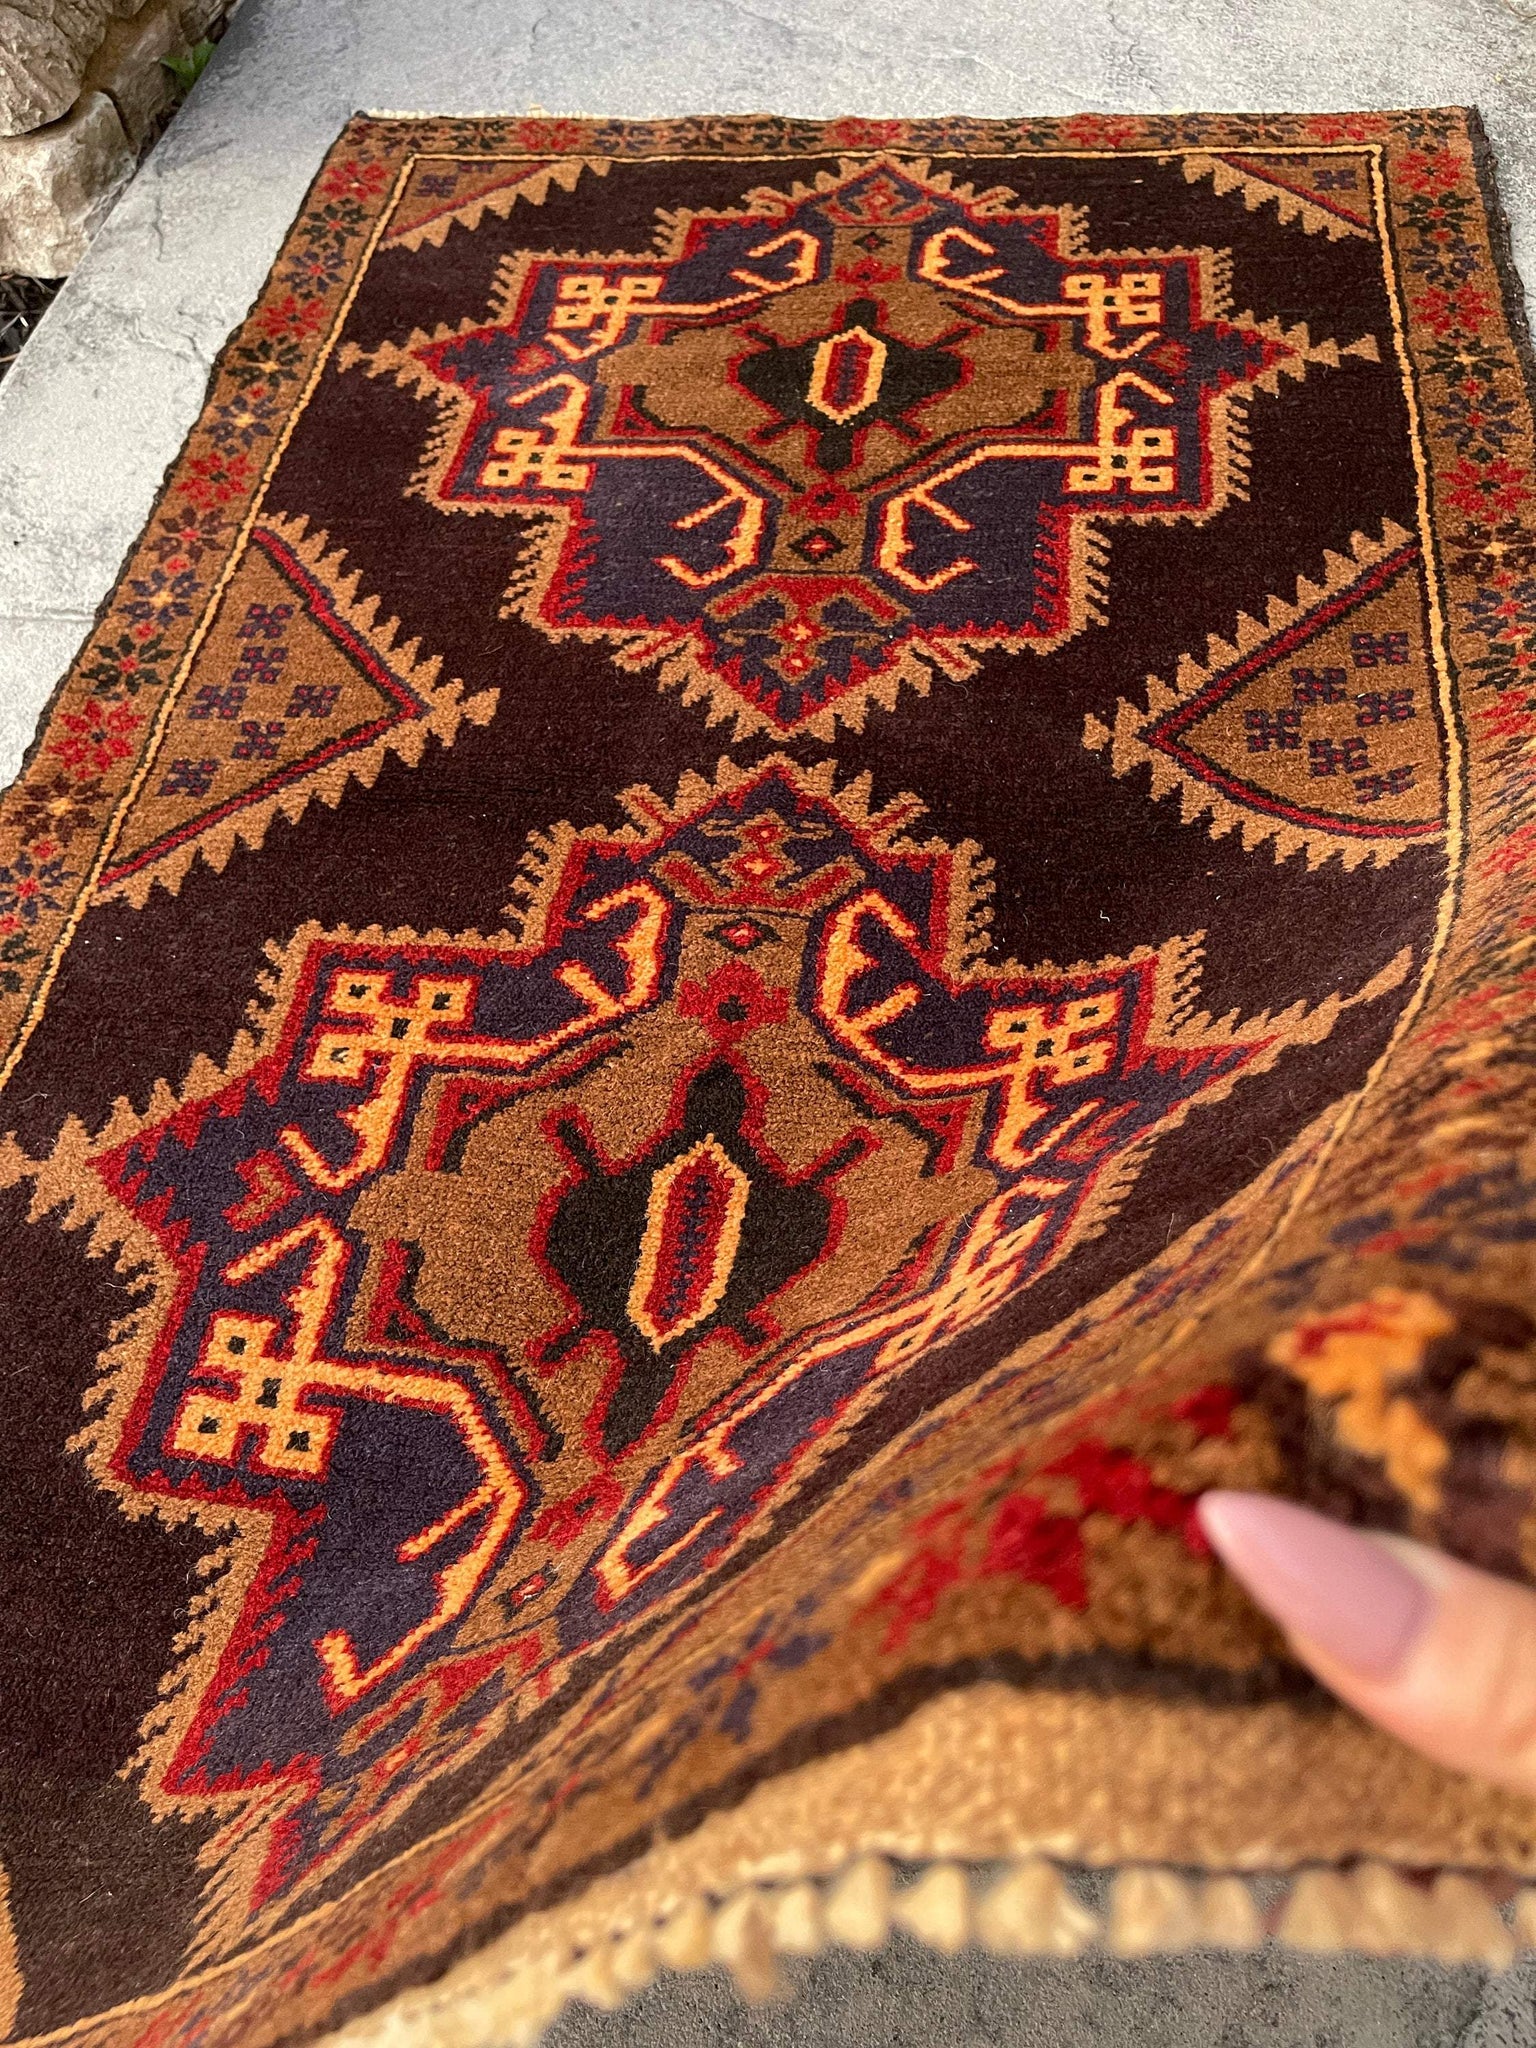 3x5 (90x150) Handmade Vintage Afghan Rug | Tan Coffee Brown Red Orange Indigo | Nomadic Baluch Boho Bohemian Tribal Turkish Moroccan Wool